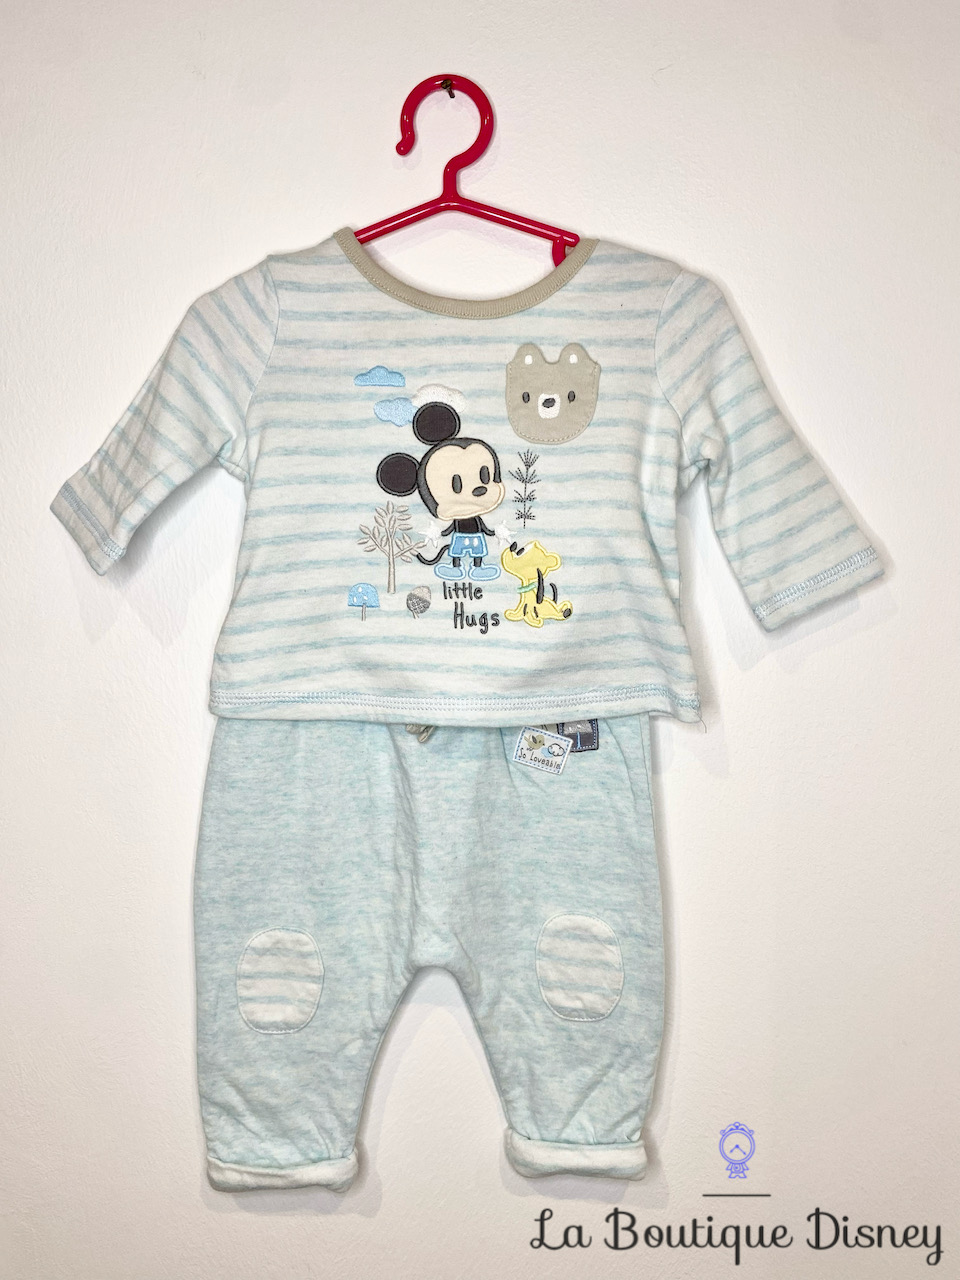 Pyjama Mickey Mouse Disney Baby by Disney Store taille 3-6 mois bleu blanc rayures Pluto Little Hugs